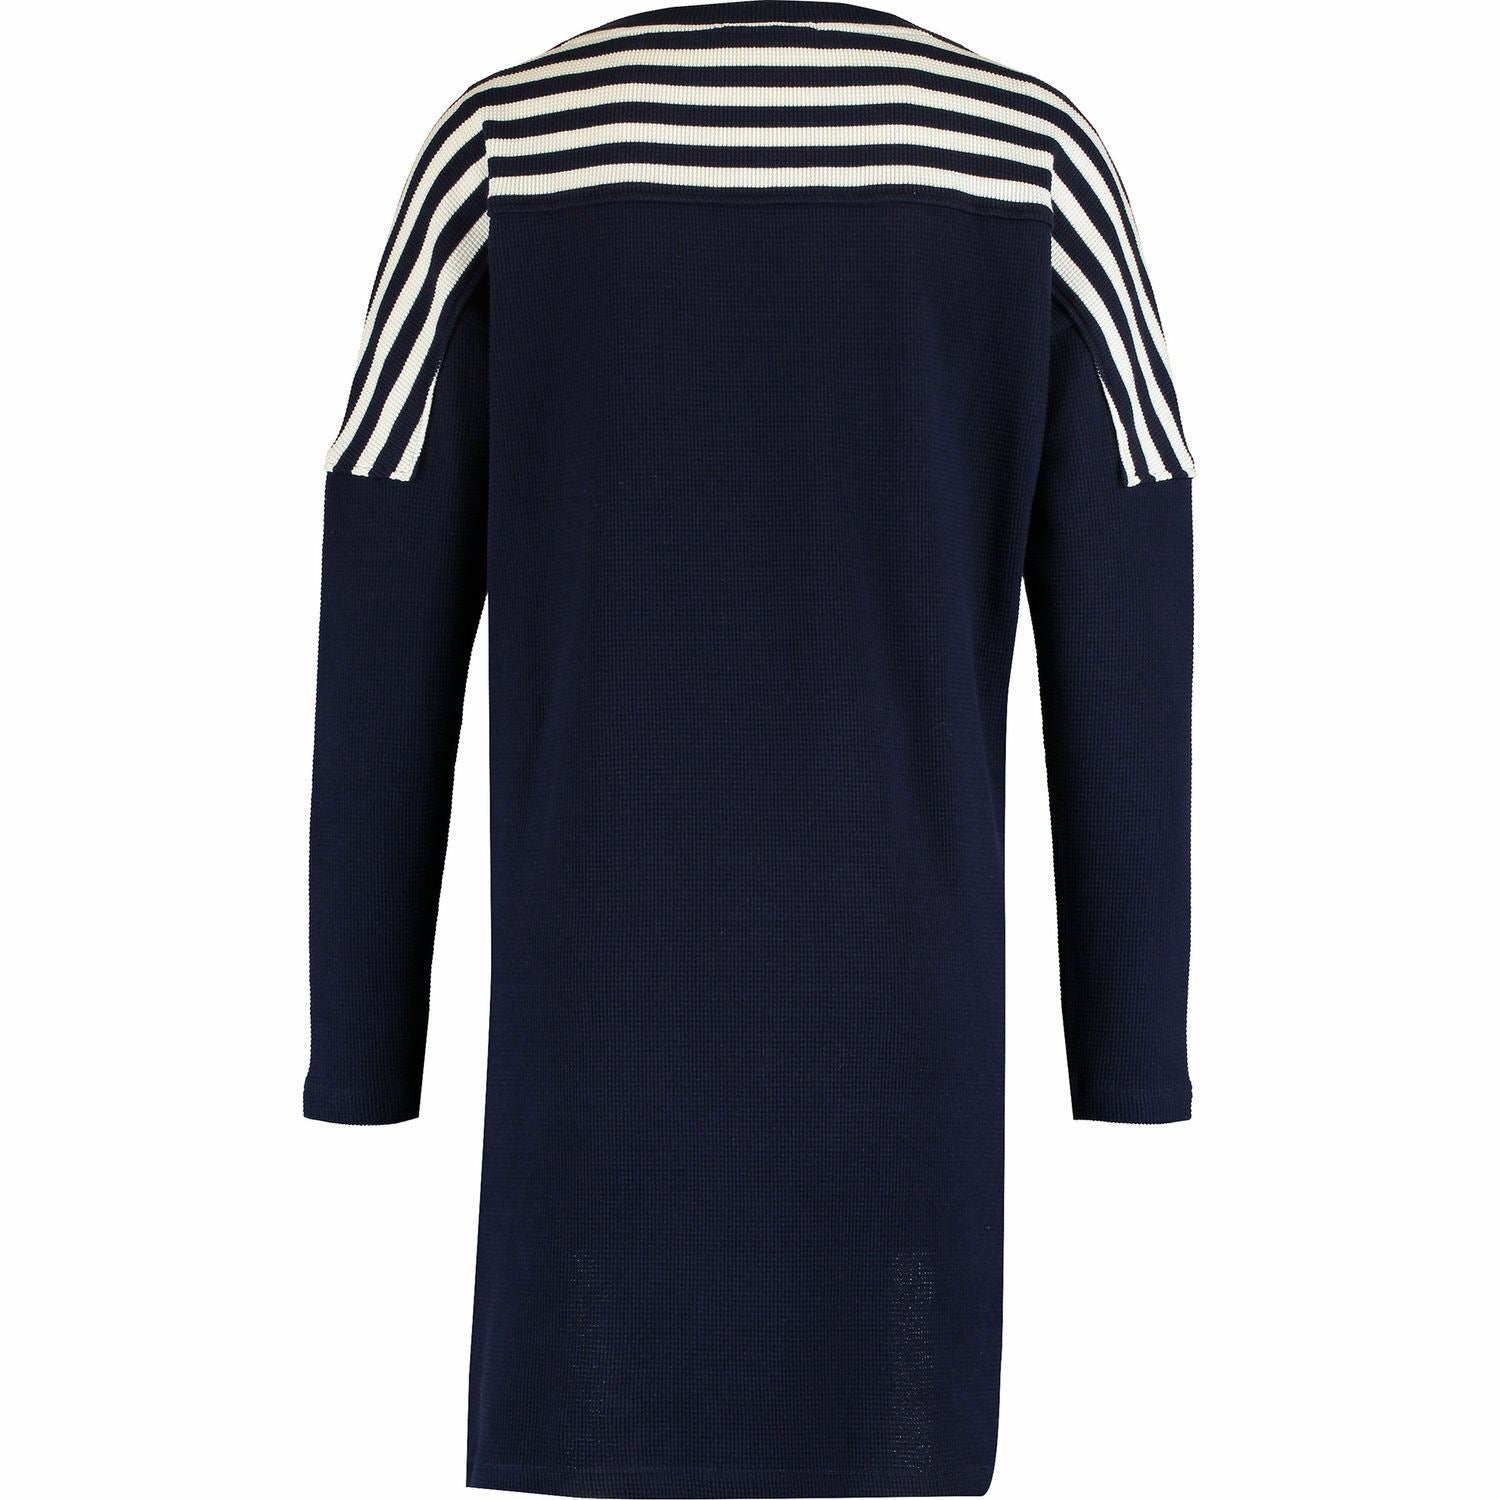 LACOSTE Womens Blue & White Striped Jumper Dress, size M & size L / FR 40 42